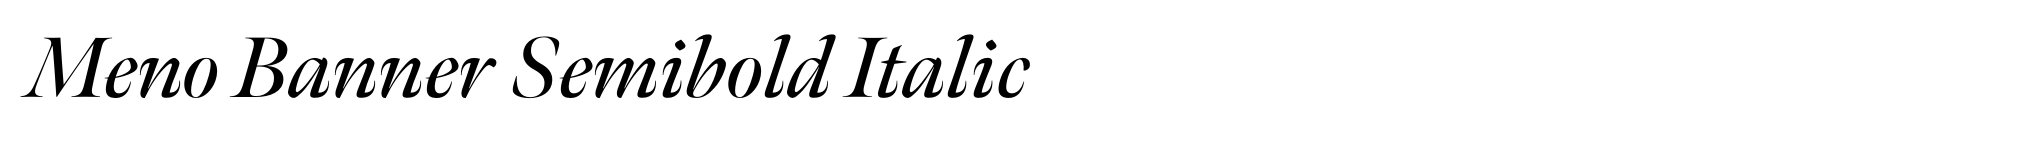 Meno Banner Semibold Italic image